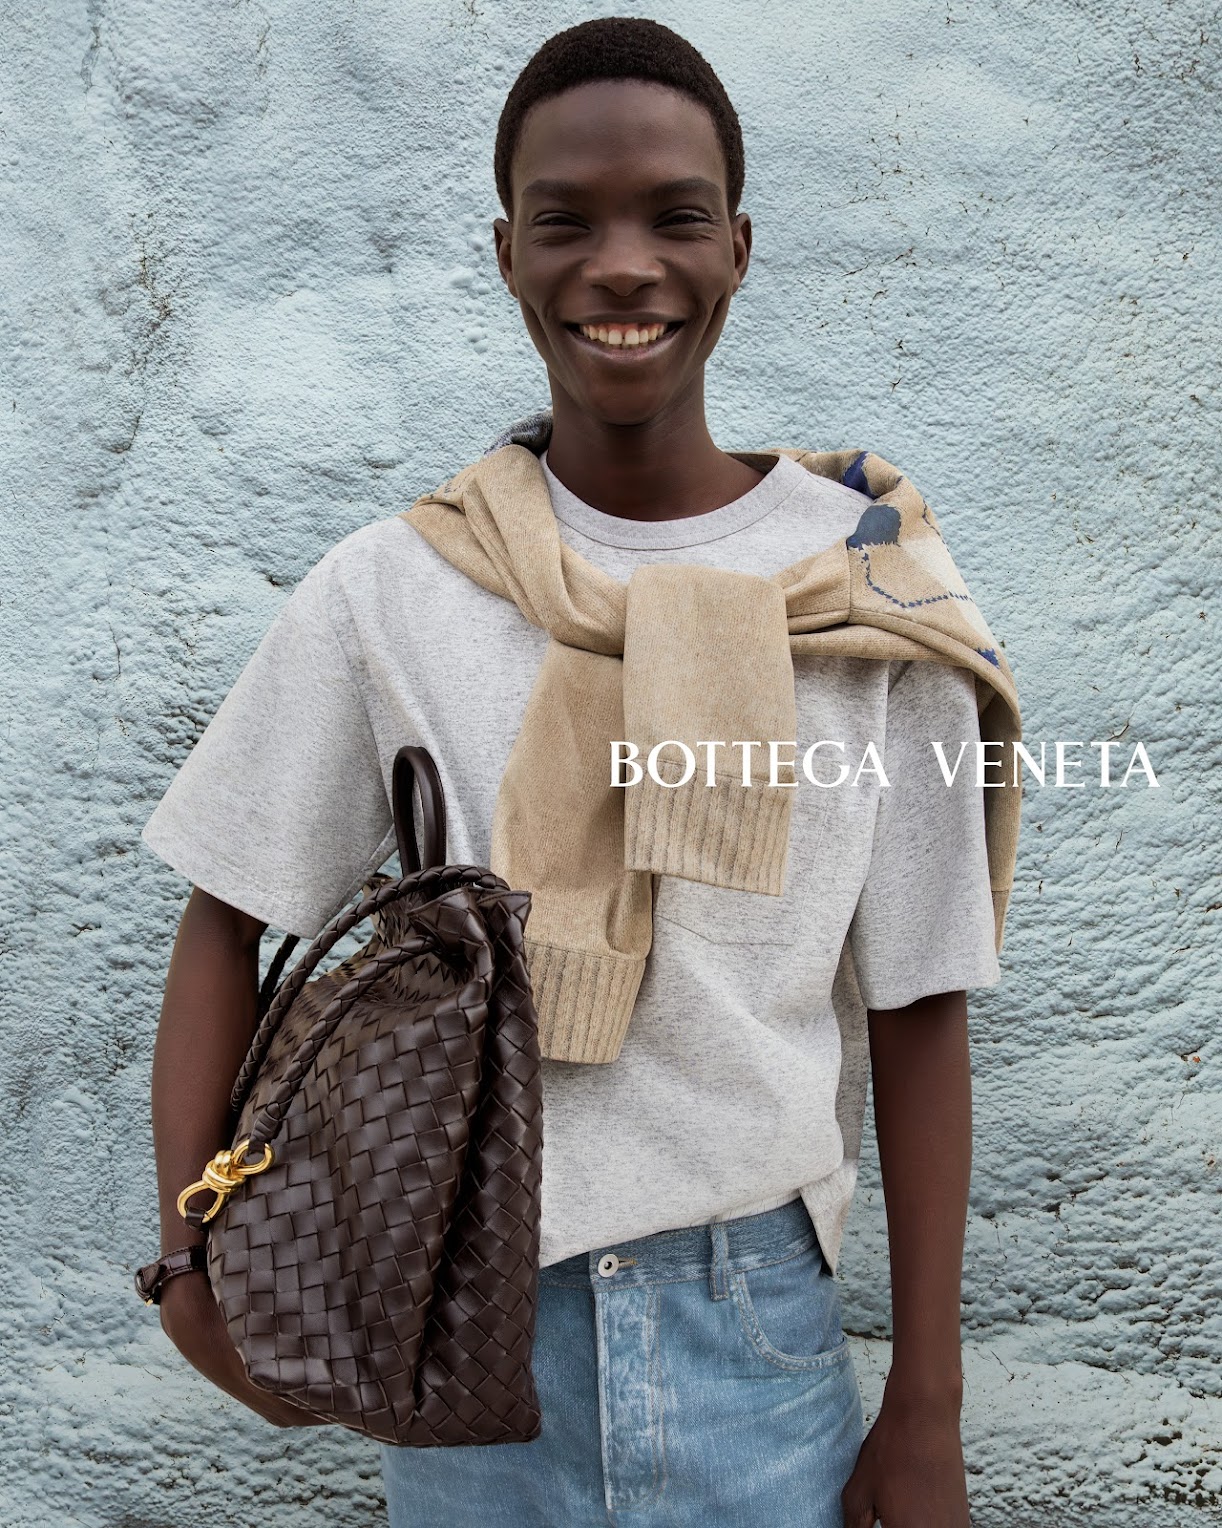 Bottega Veneta's latest campaign is the Fitzcarraldo Editions of